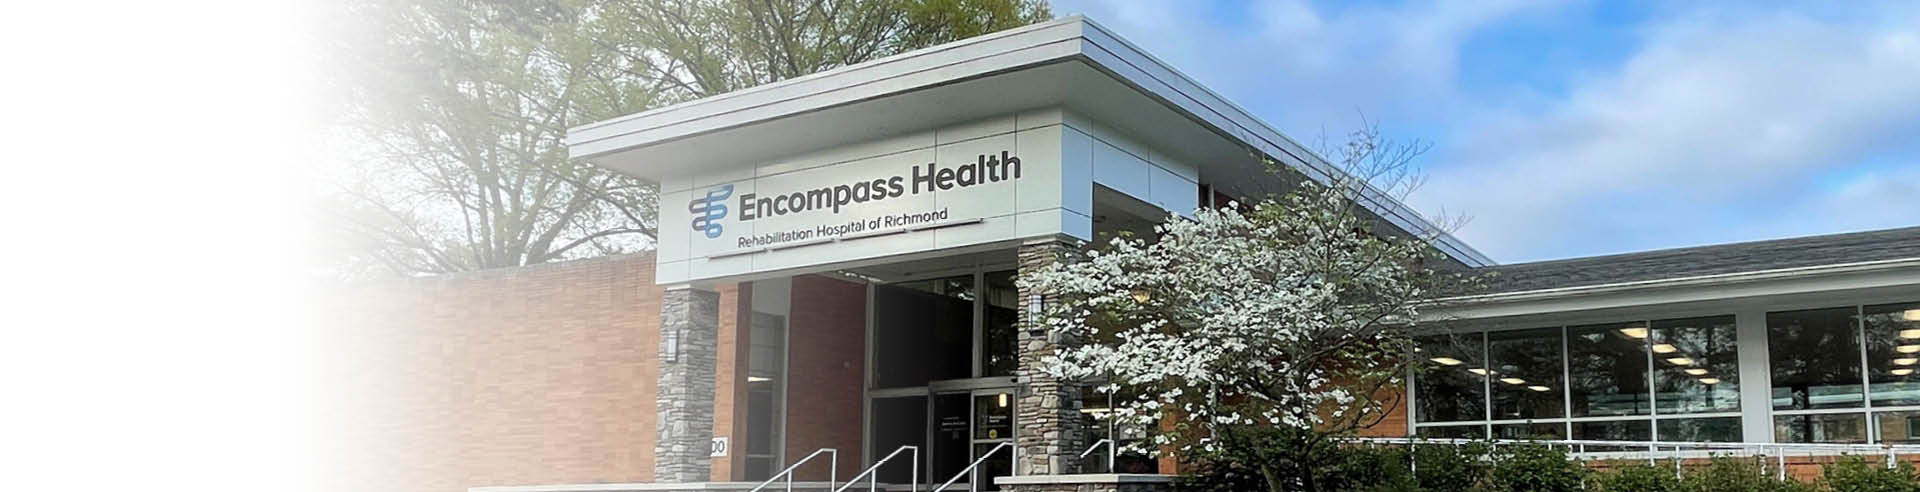 Exterior image of Encompass Health Rehabilitation Hospital of Richmond